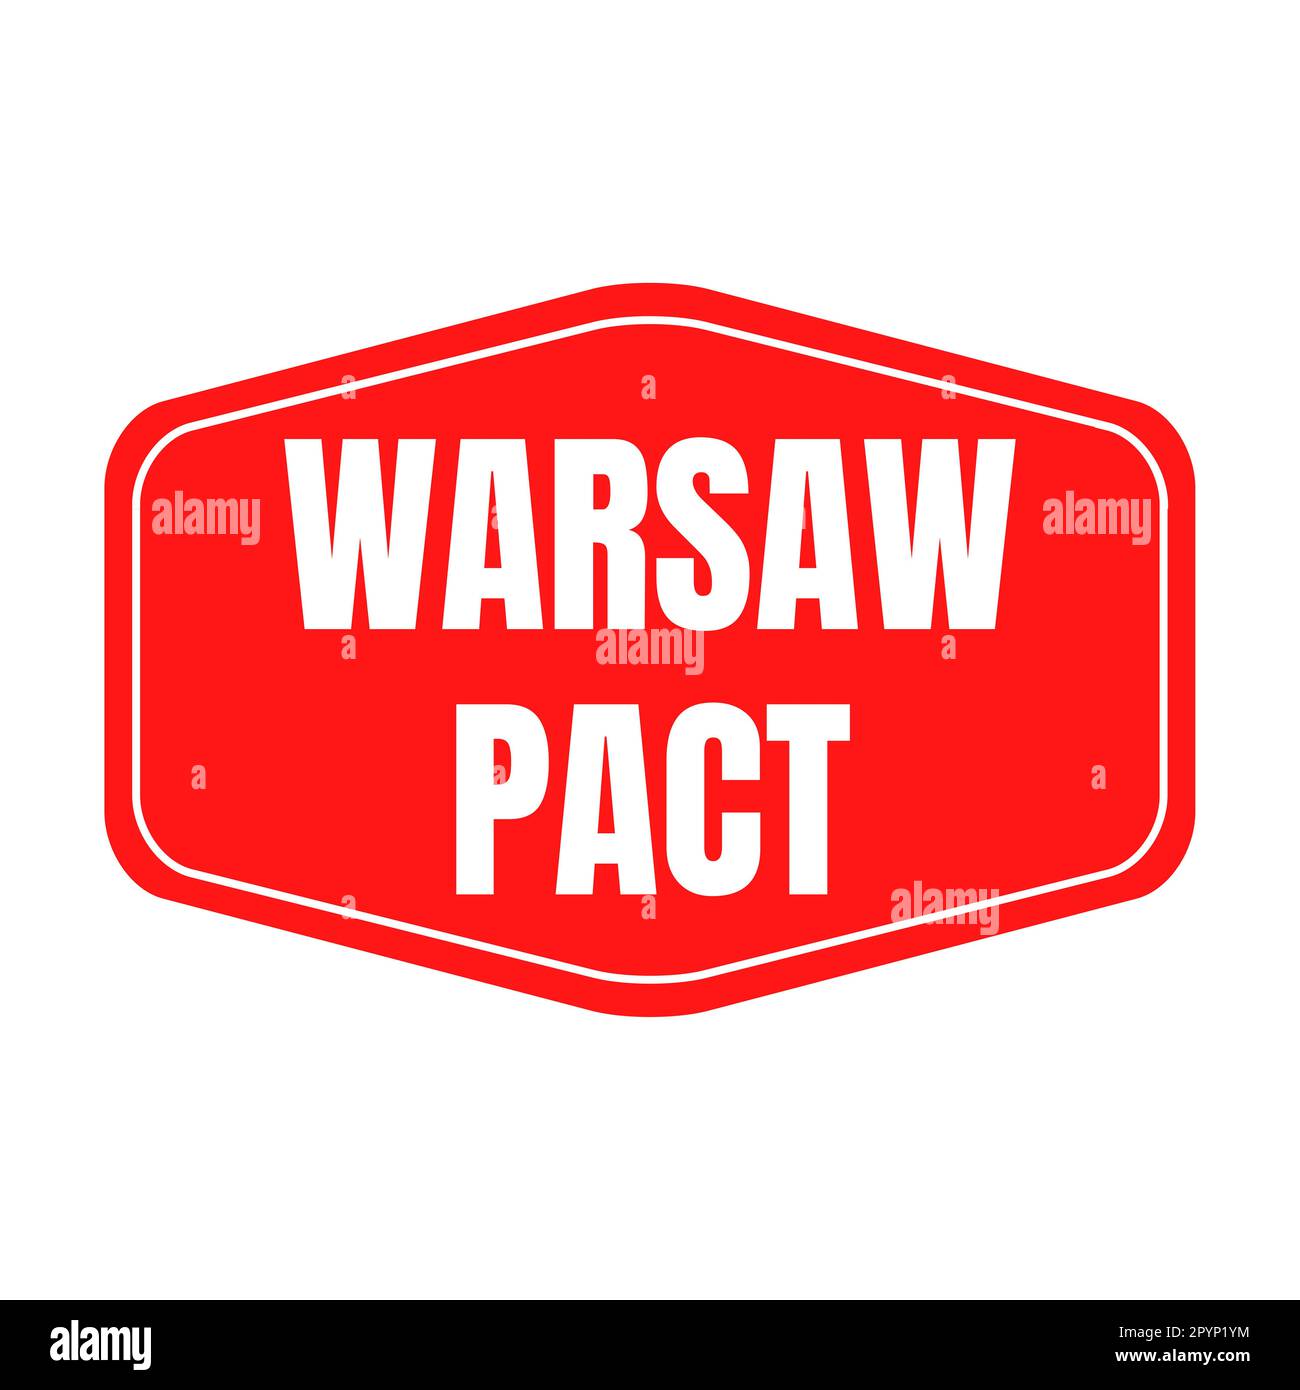 Warsaw pact symbol icon Stock Photo